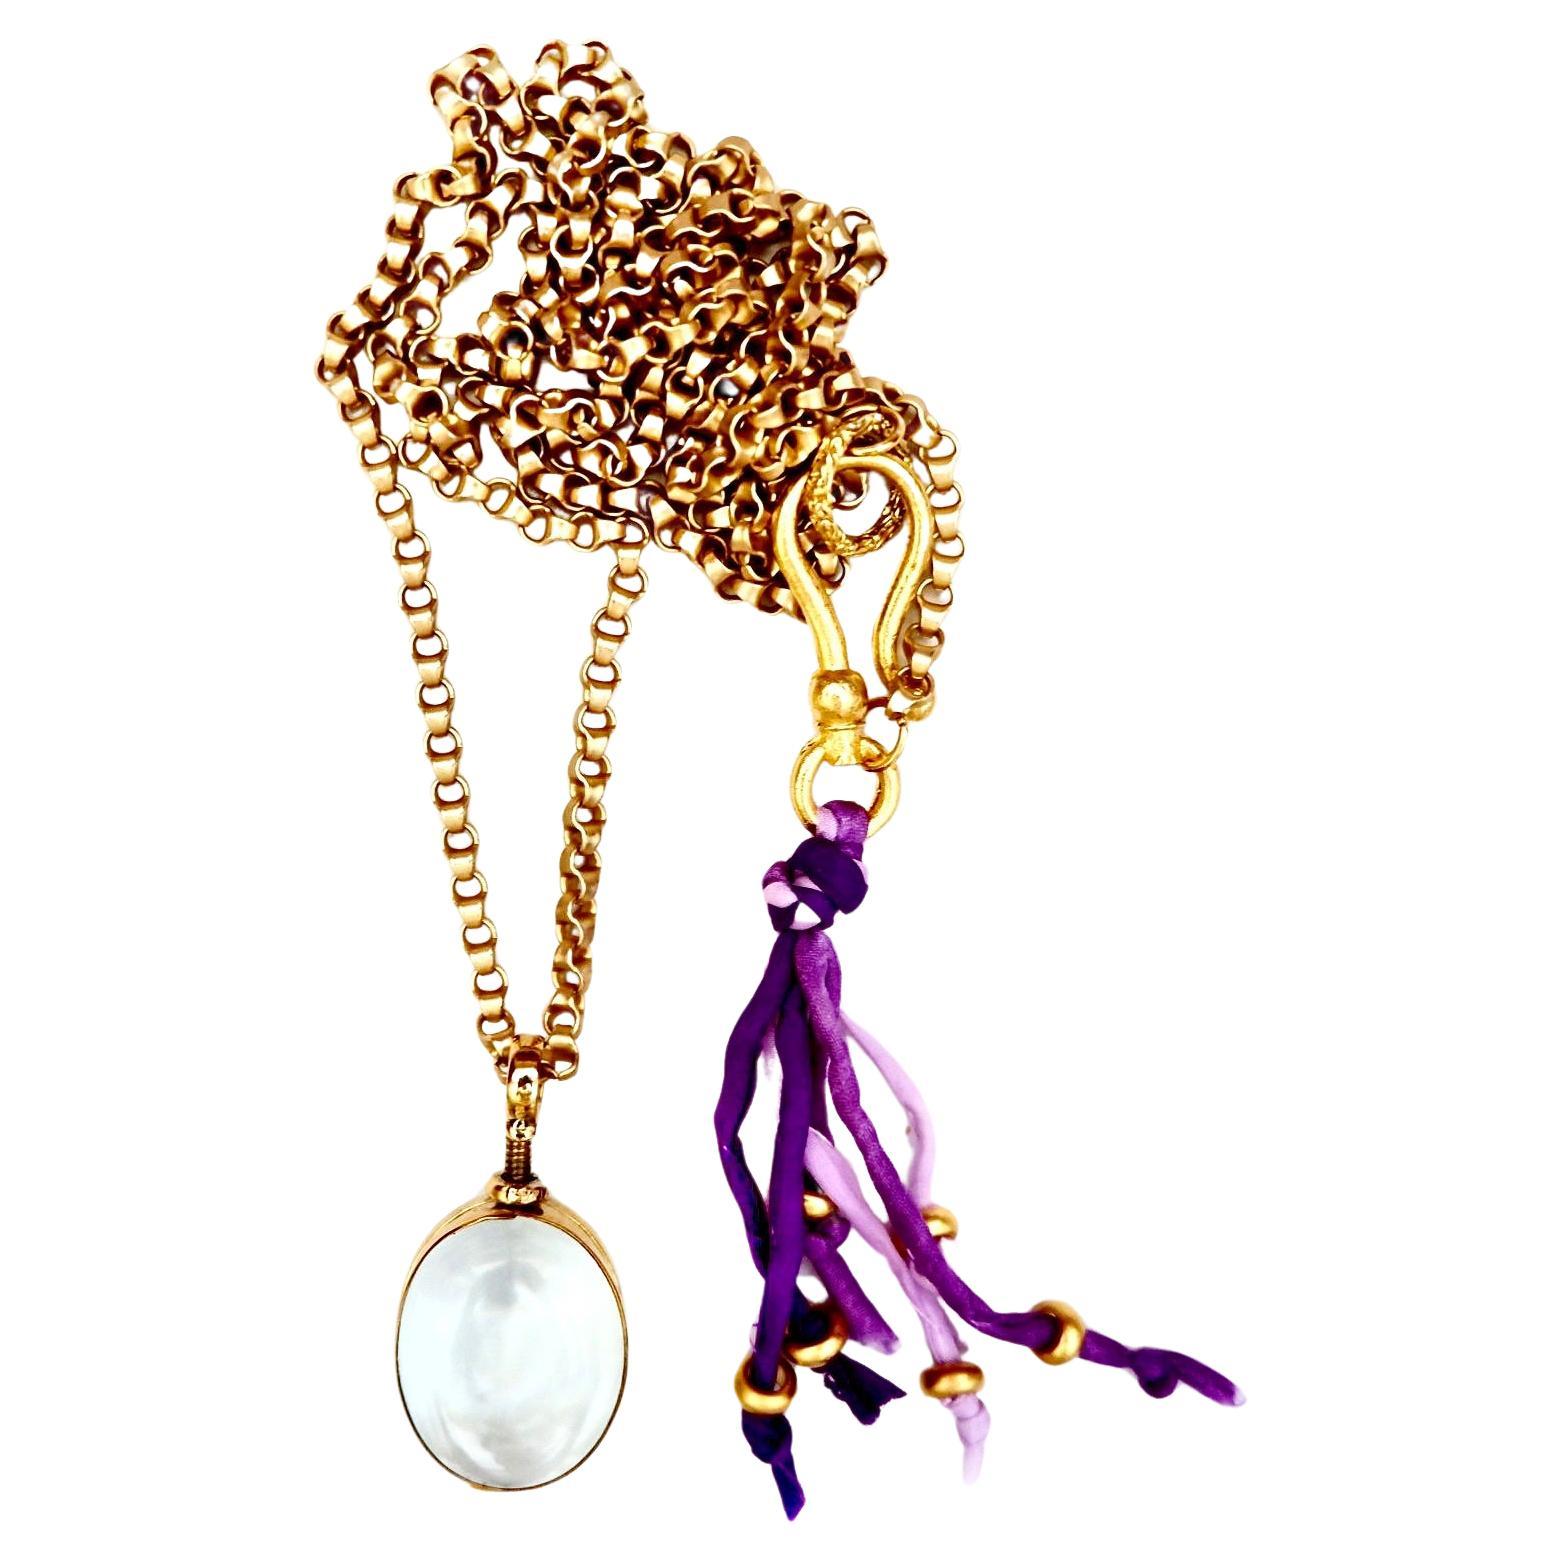 Vintage Brass Chain Vintage Glass Oval Locket Necklace